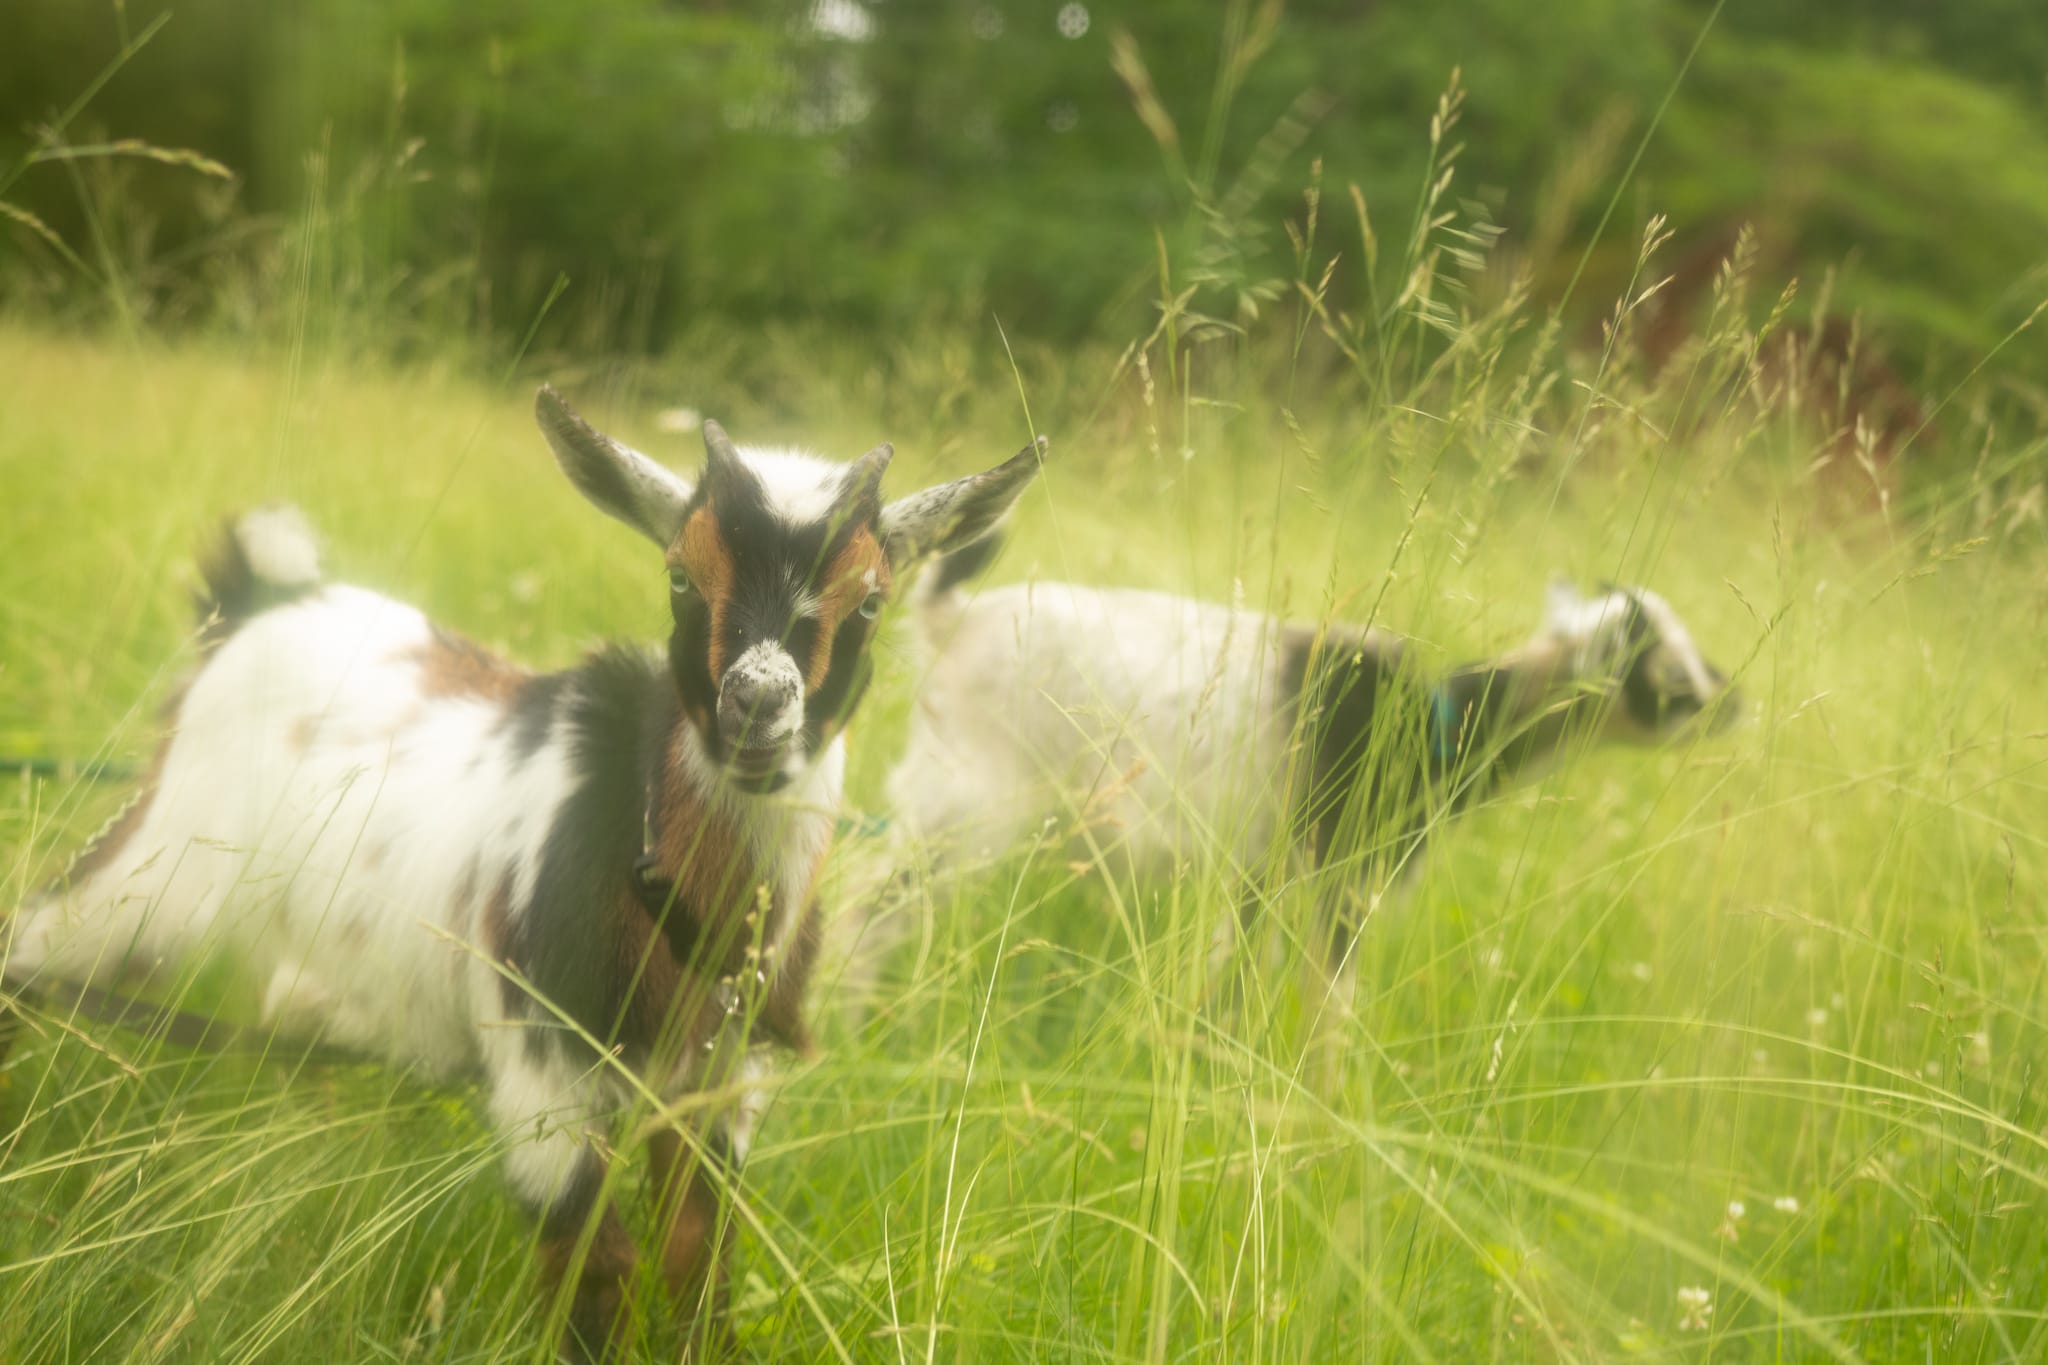 Our helpful little goats, Rambo & Yari, munching on the overgrown grass